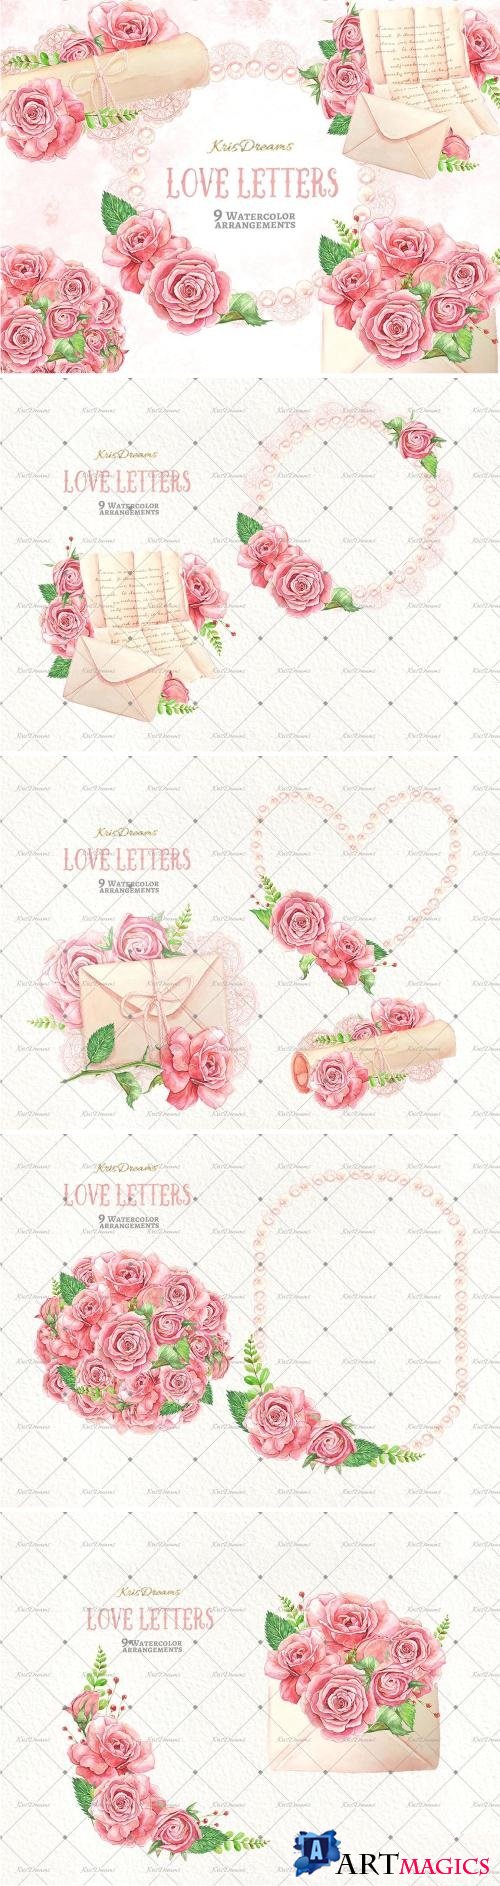 Love Letter Watercolor Clipart - 2075253